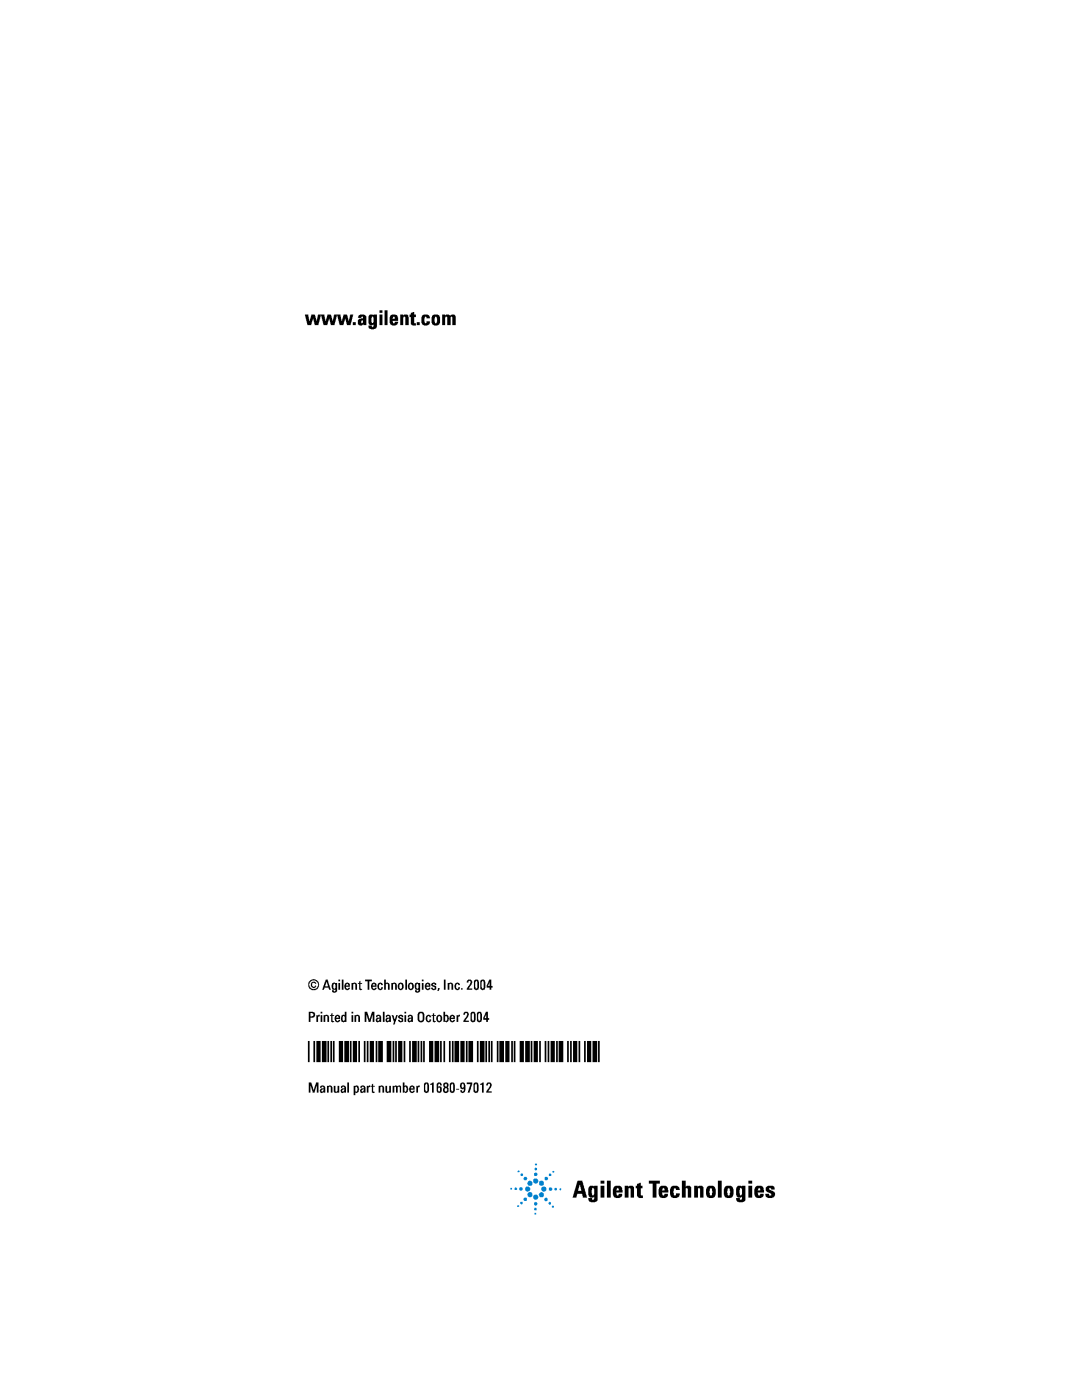 Agilent Technologies quick start Agilent Technologies, 01680-97012, Manual part number 